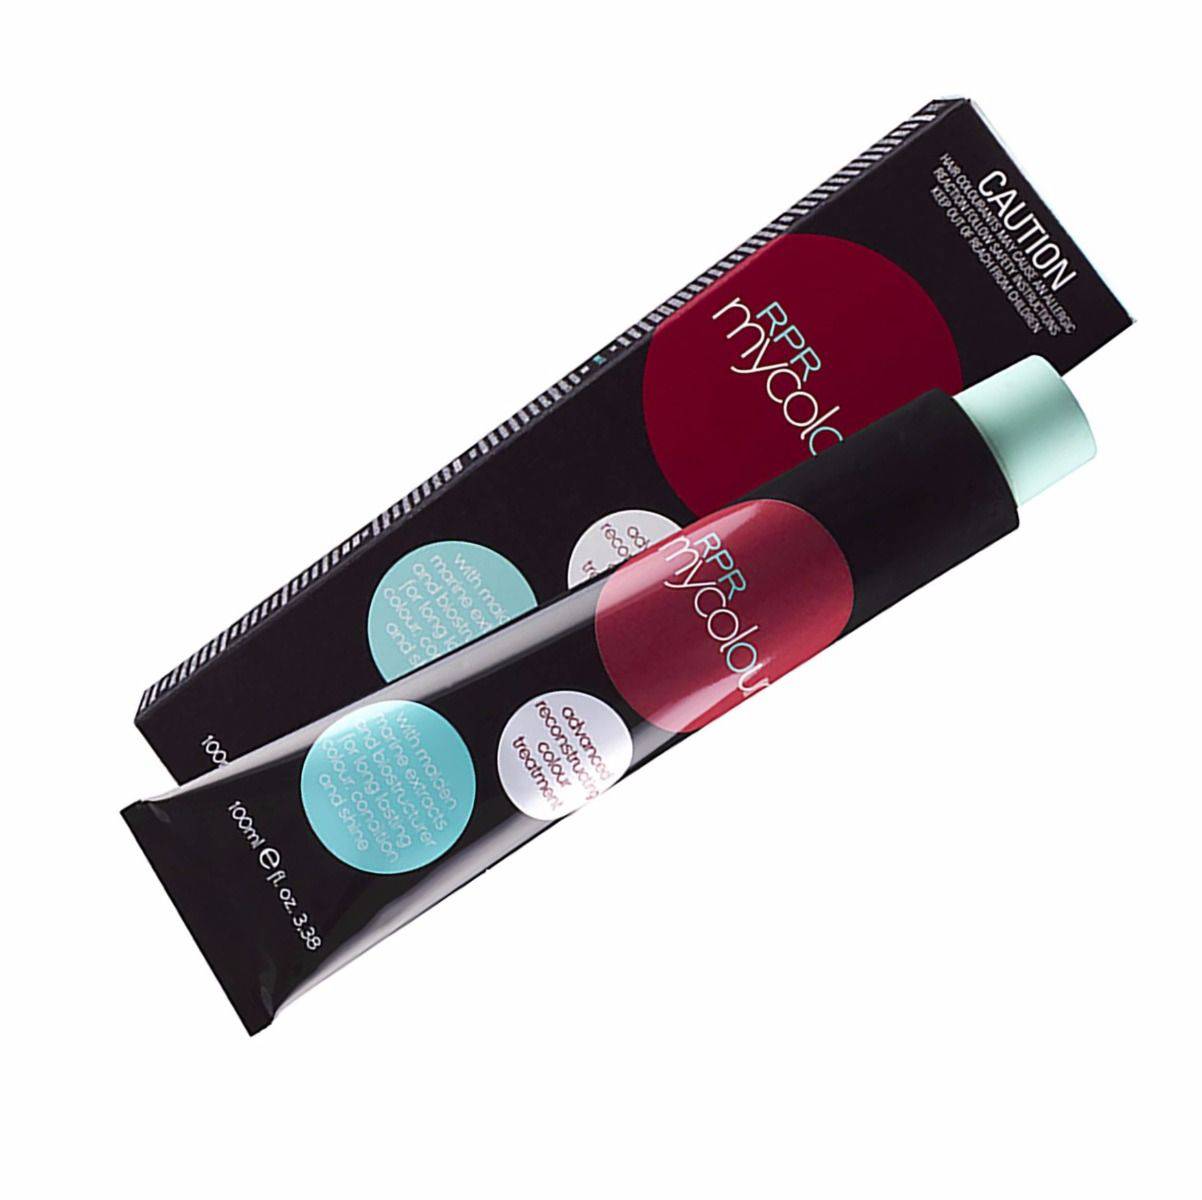 RPR My Colour 6.22 Level 6 Intense Violet 100g tube Mix 1:1.5 - On Line Hair Depot